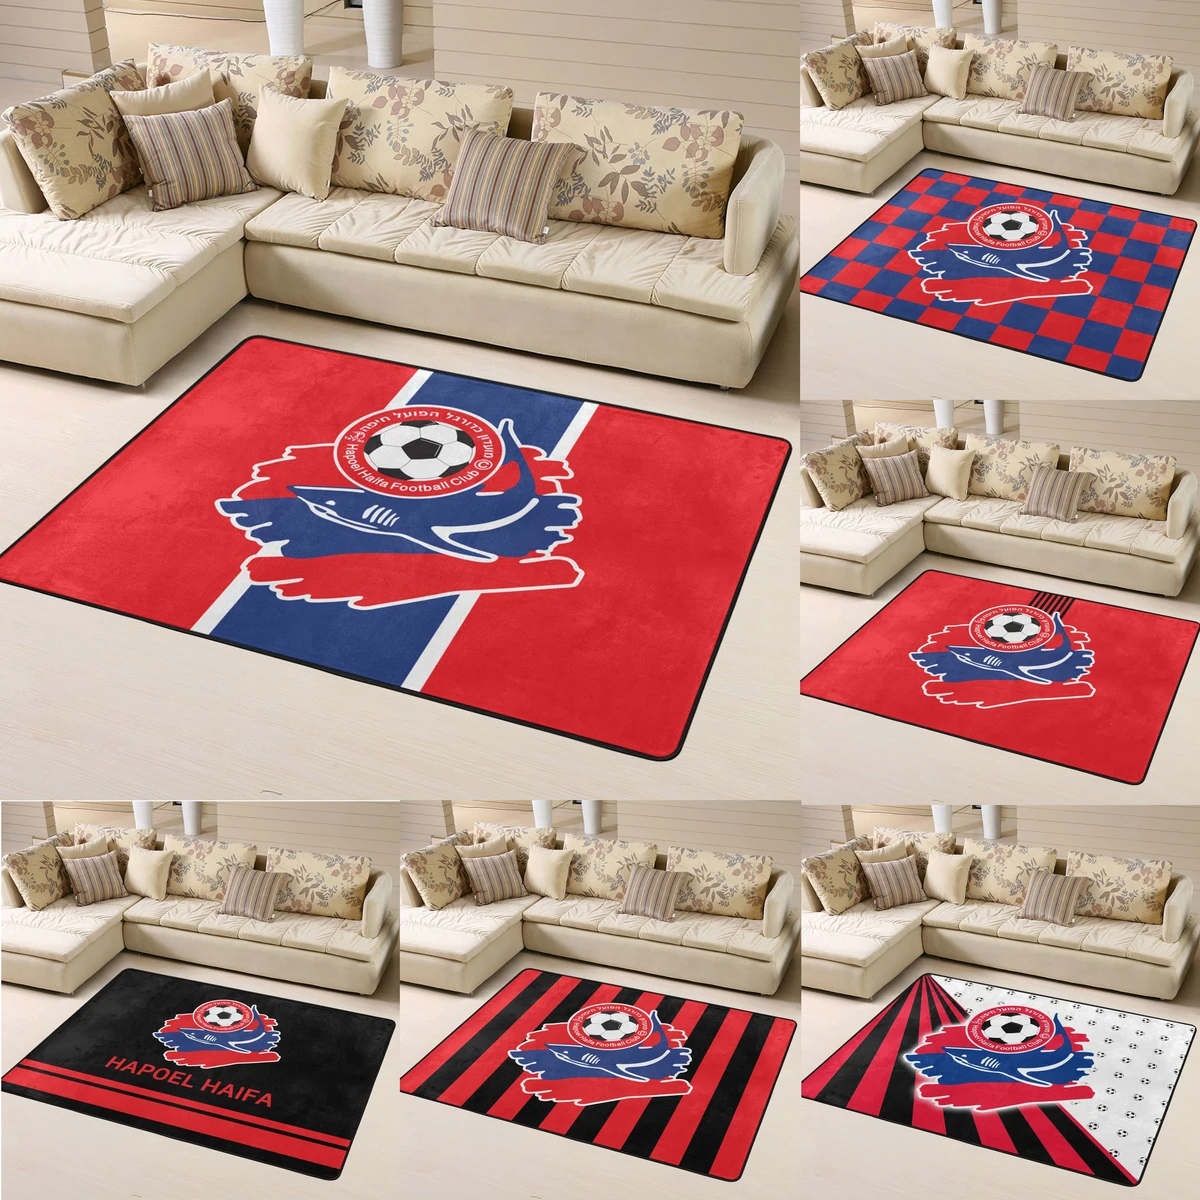 

Israel Hapoel Haifa FC Suede Carpet Floor Mats Anti-Slip Anti-Fouling Decorate Your Living Room Bedroom 160X122CM